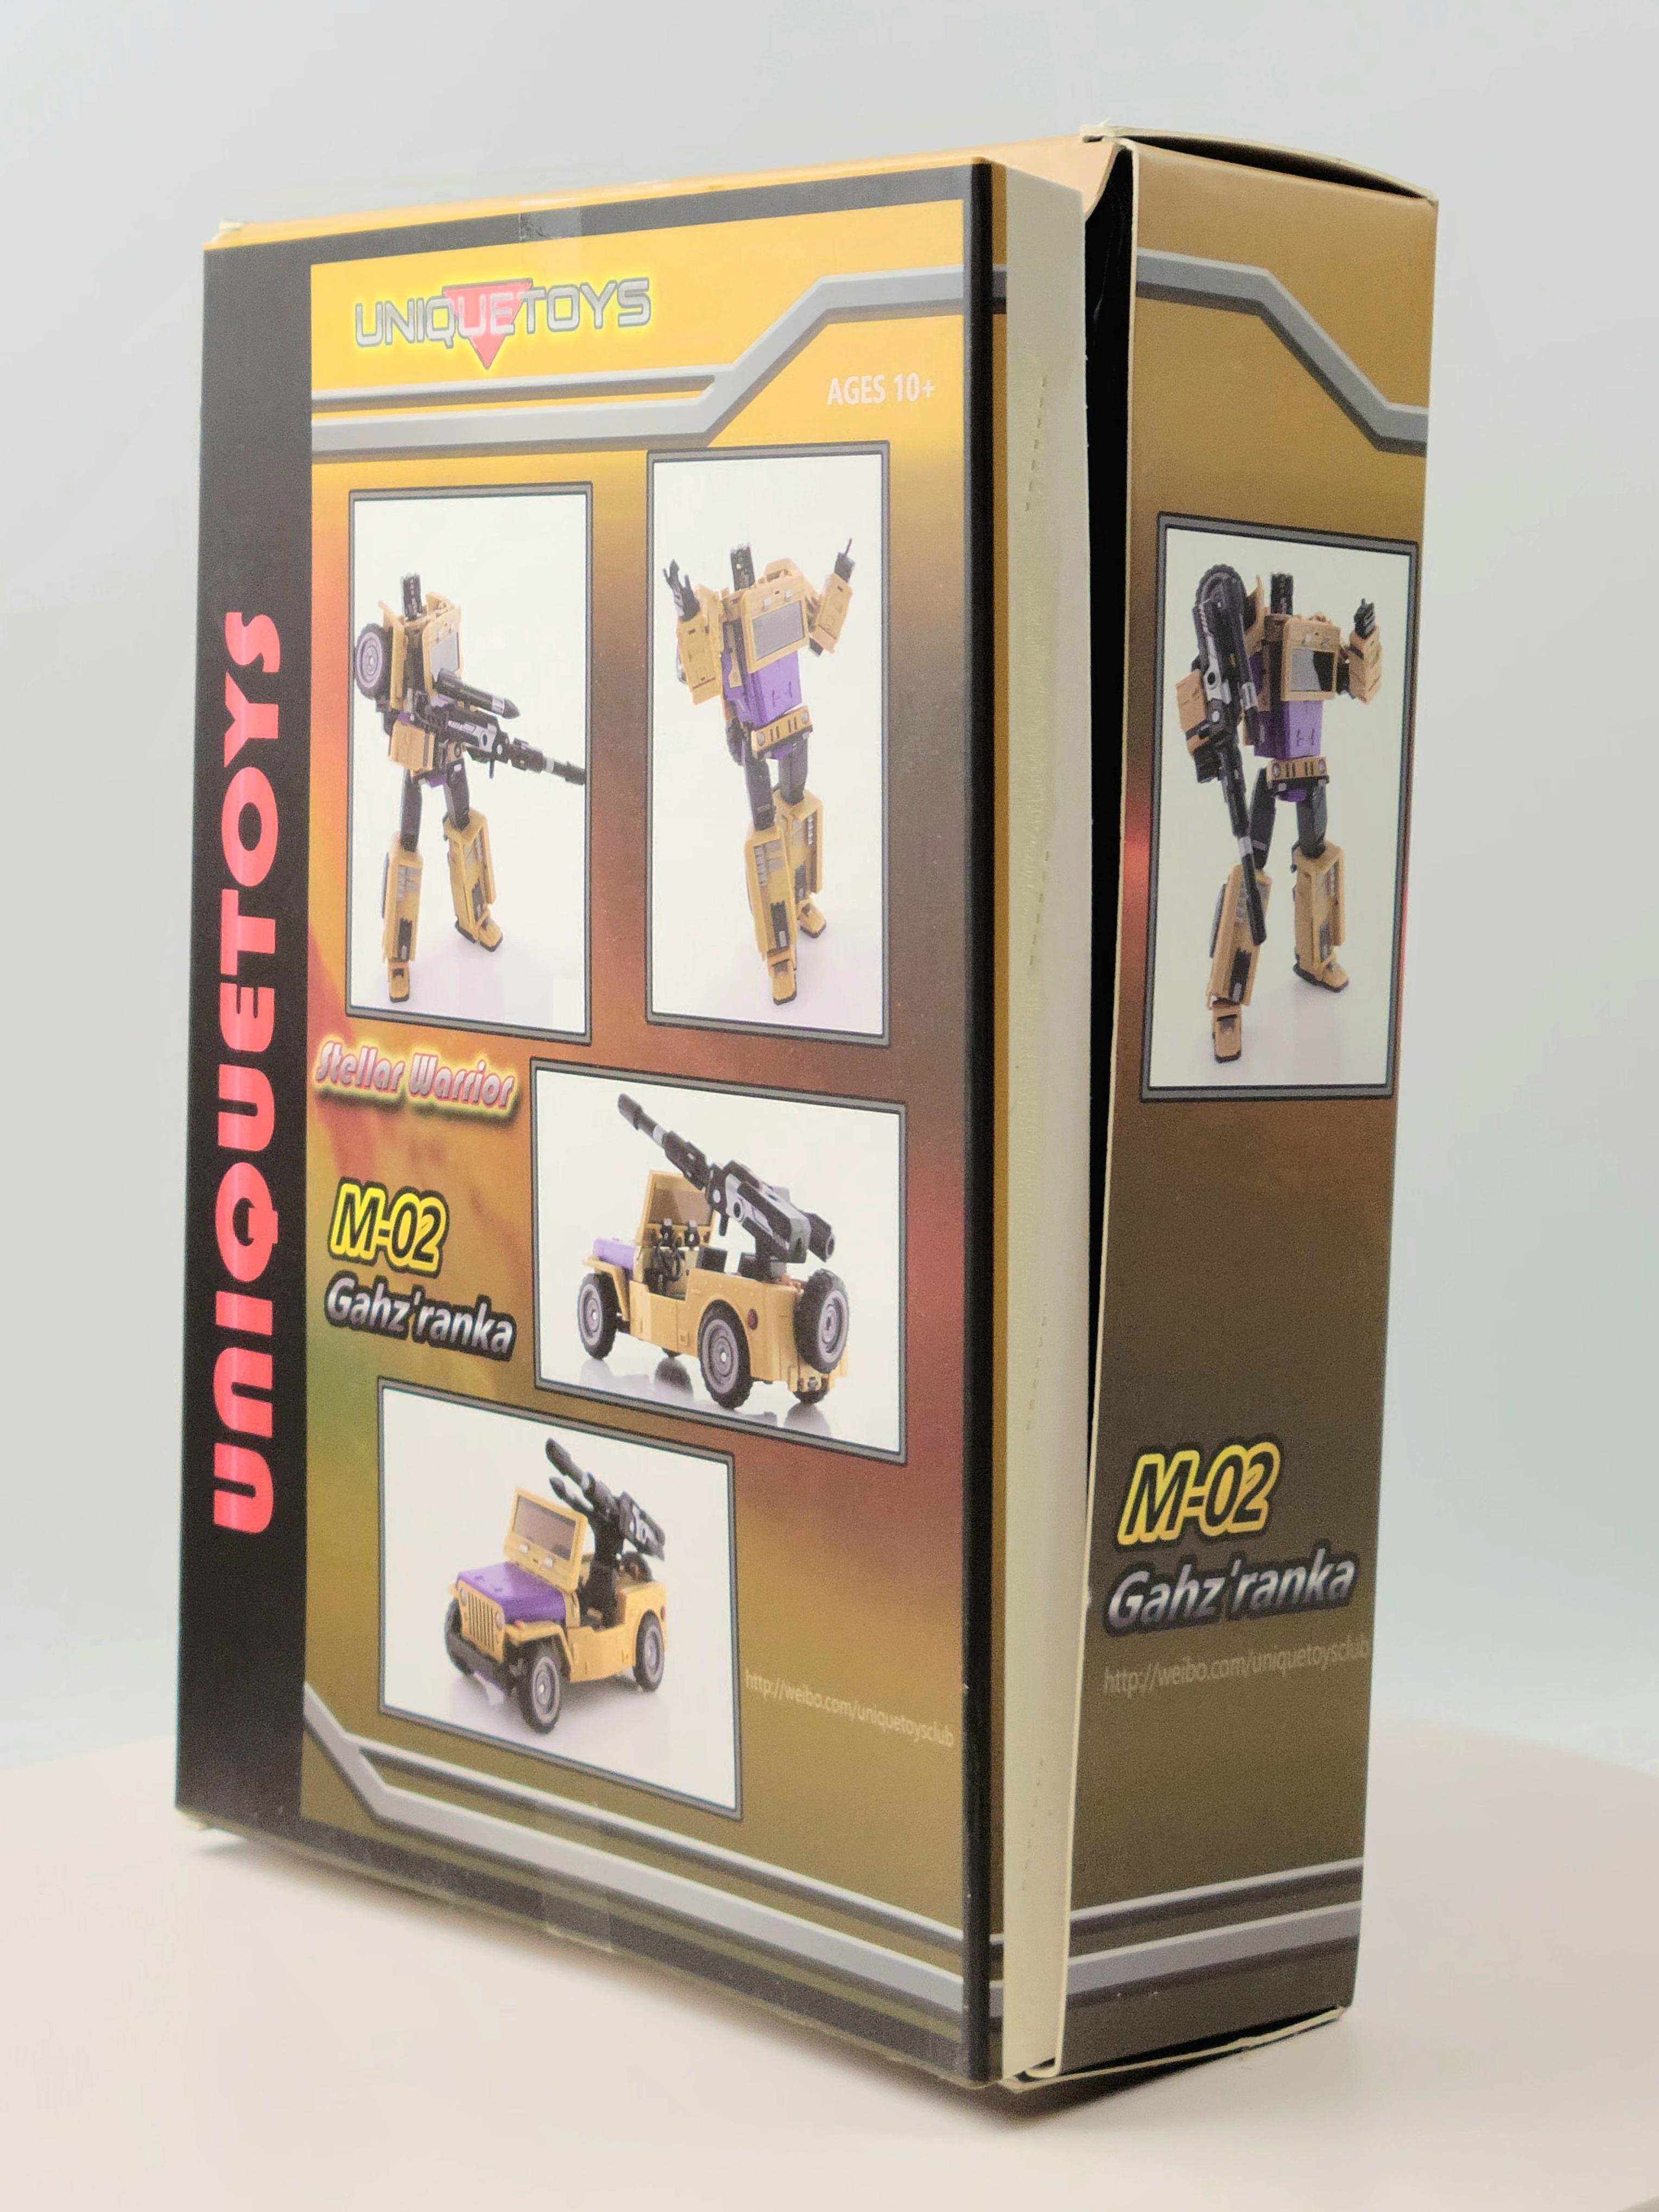 Unique Toys M 02 Gahz'ranka Stellar Warrior Swindle BOX ONLY - NO FIGURES